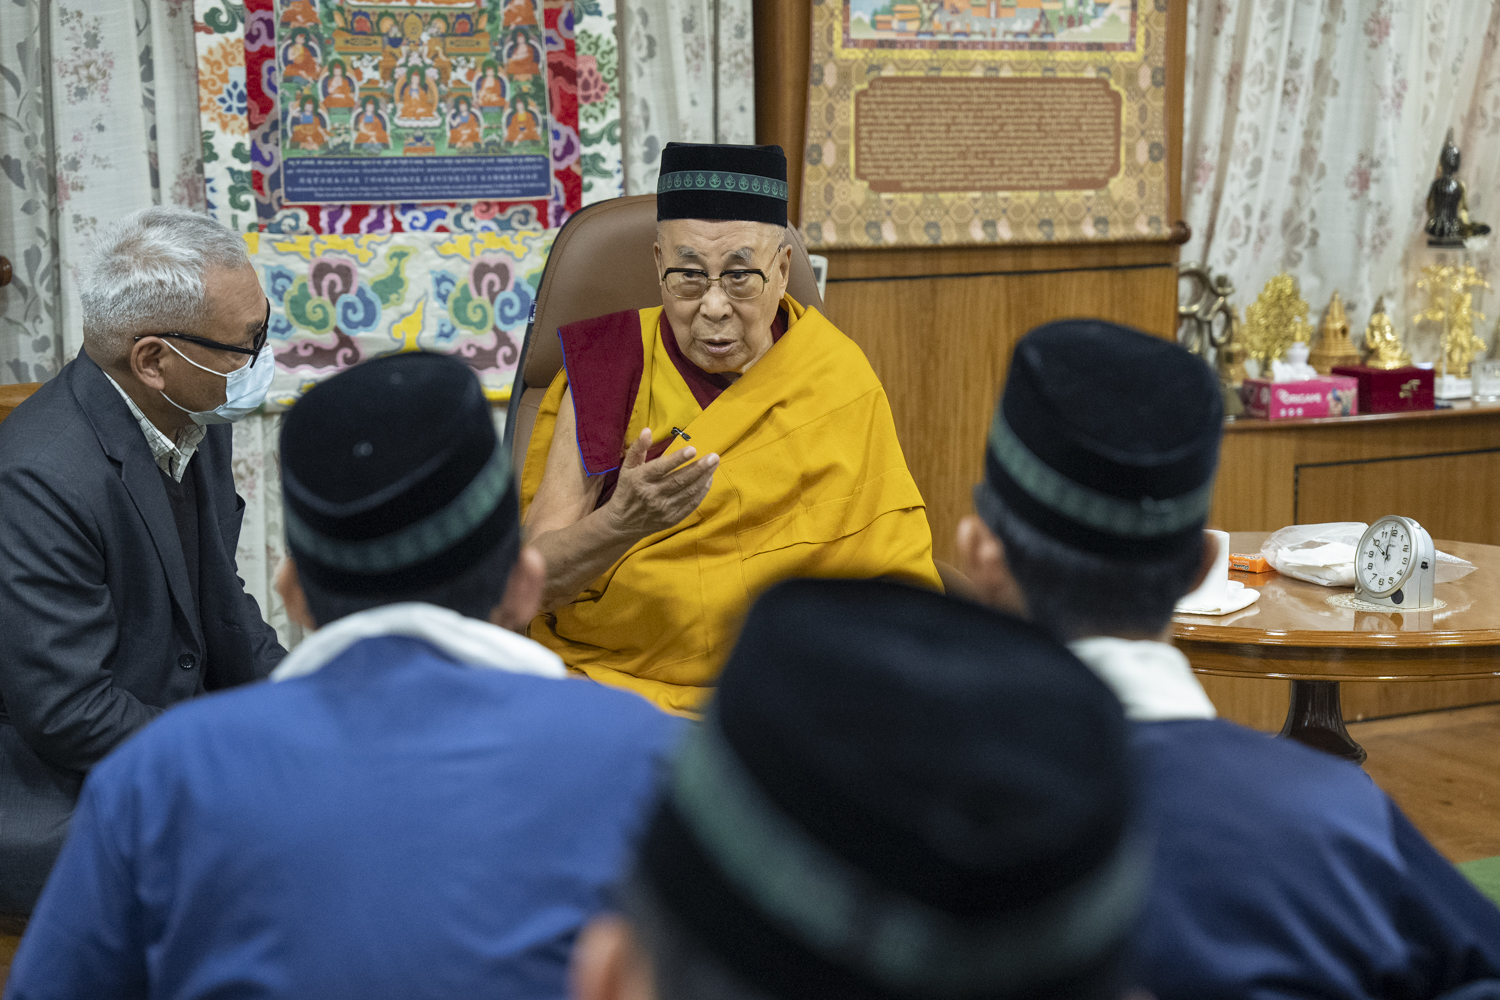 His Holiness the Dalai Lama addressing the Muslim scholars. Photo/Tenzin Choejor/OHHDL.